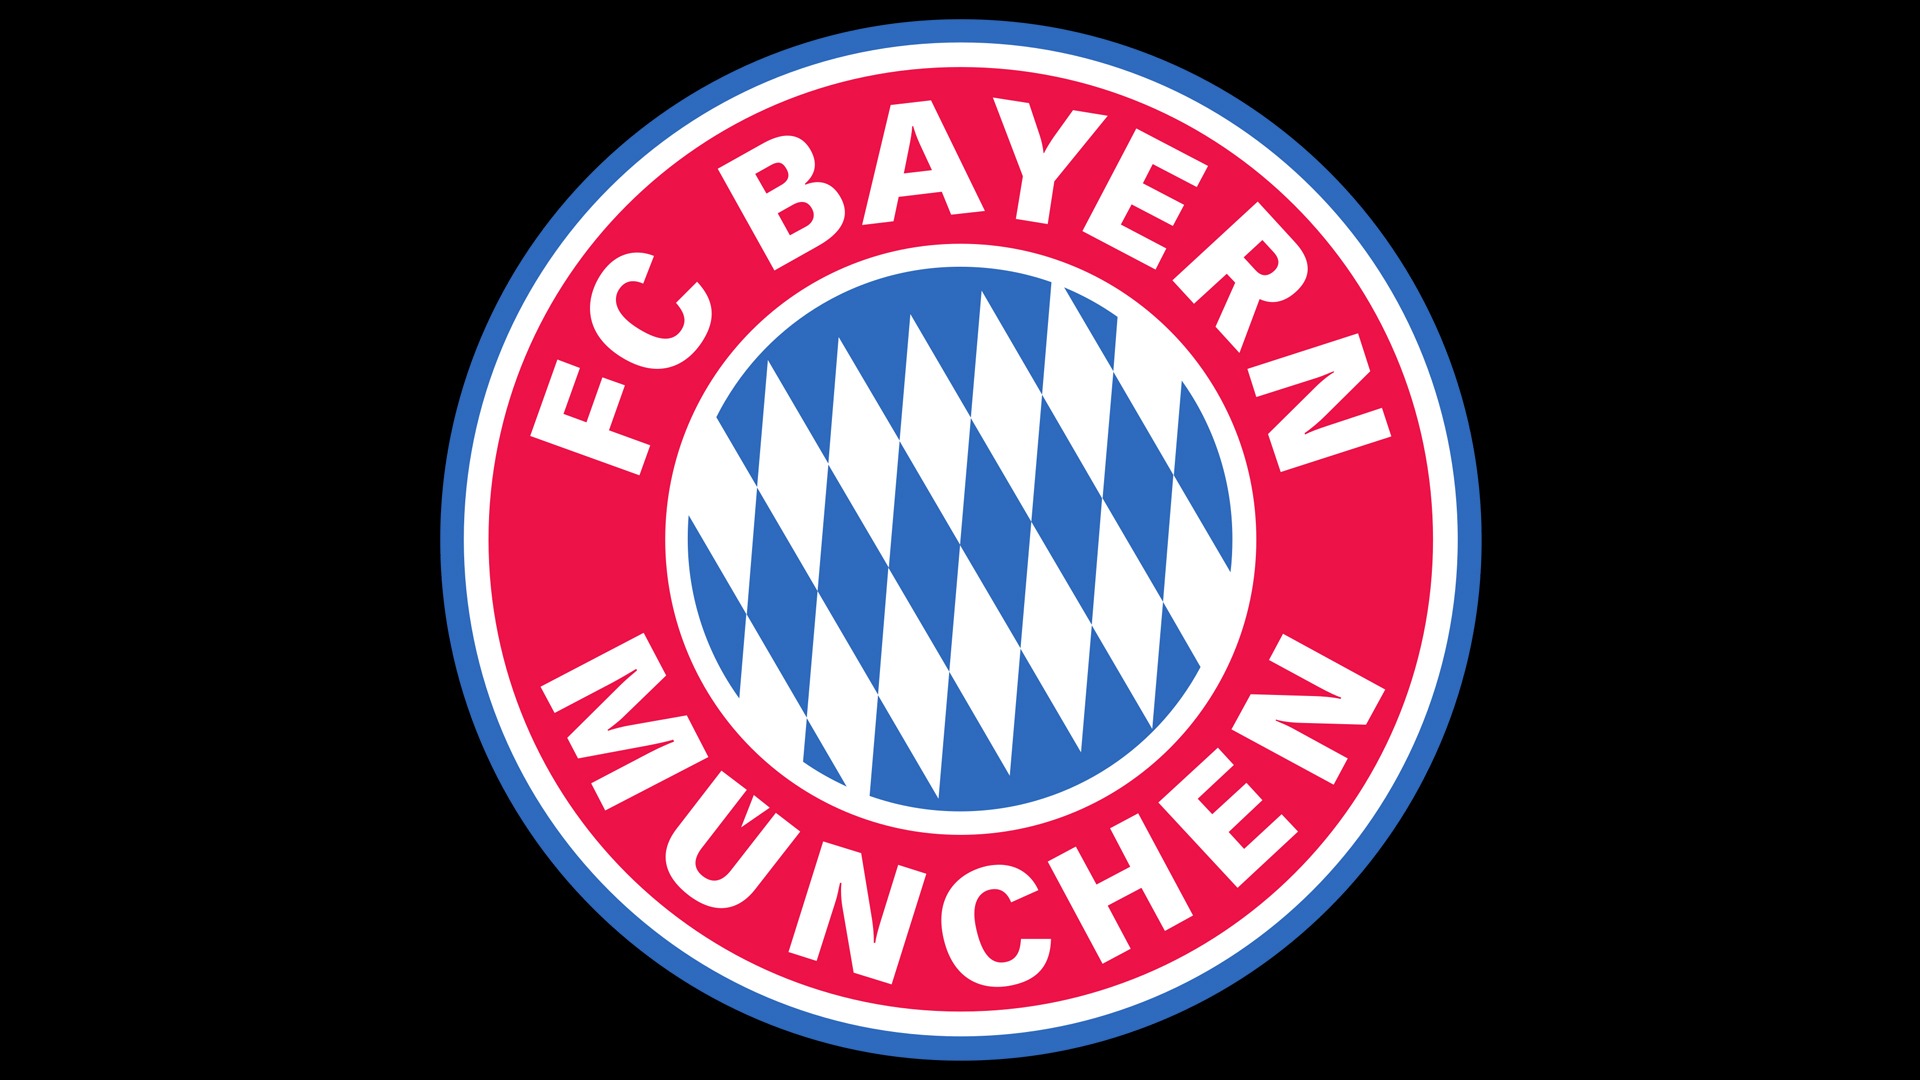 Bayern Munich logo : histoire, signification et évolution ...